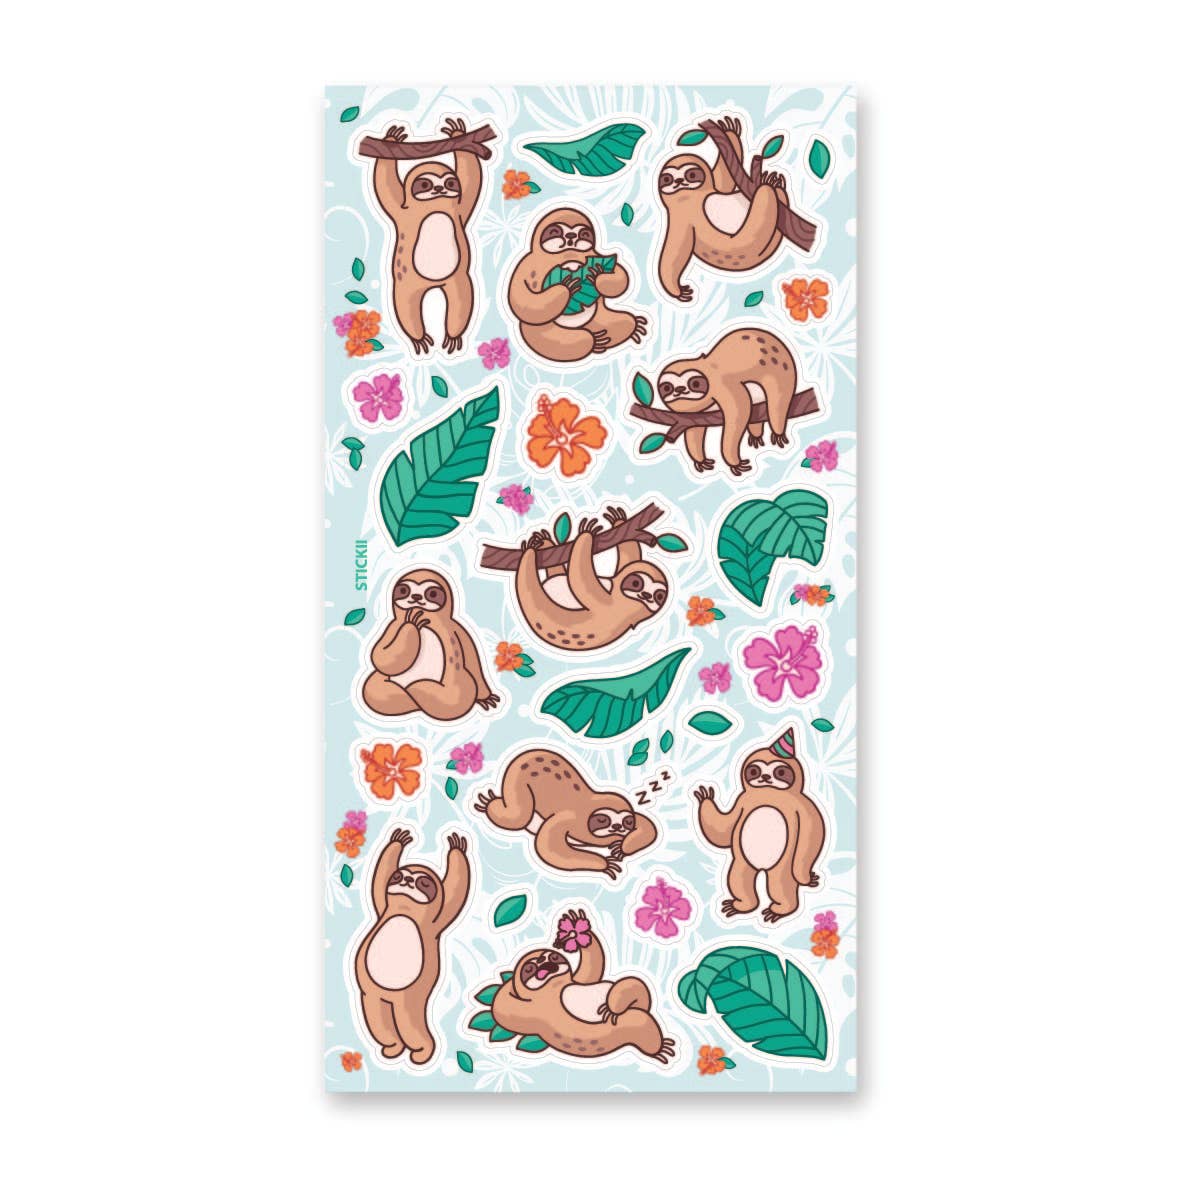 Ho’omaha Sloth Sticker Sheet